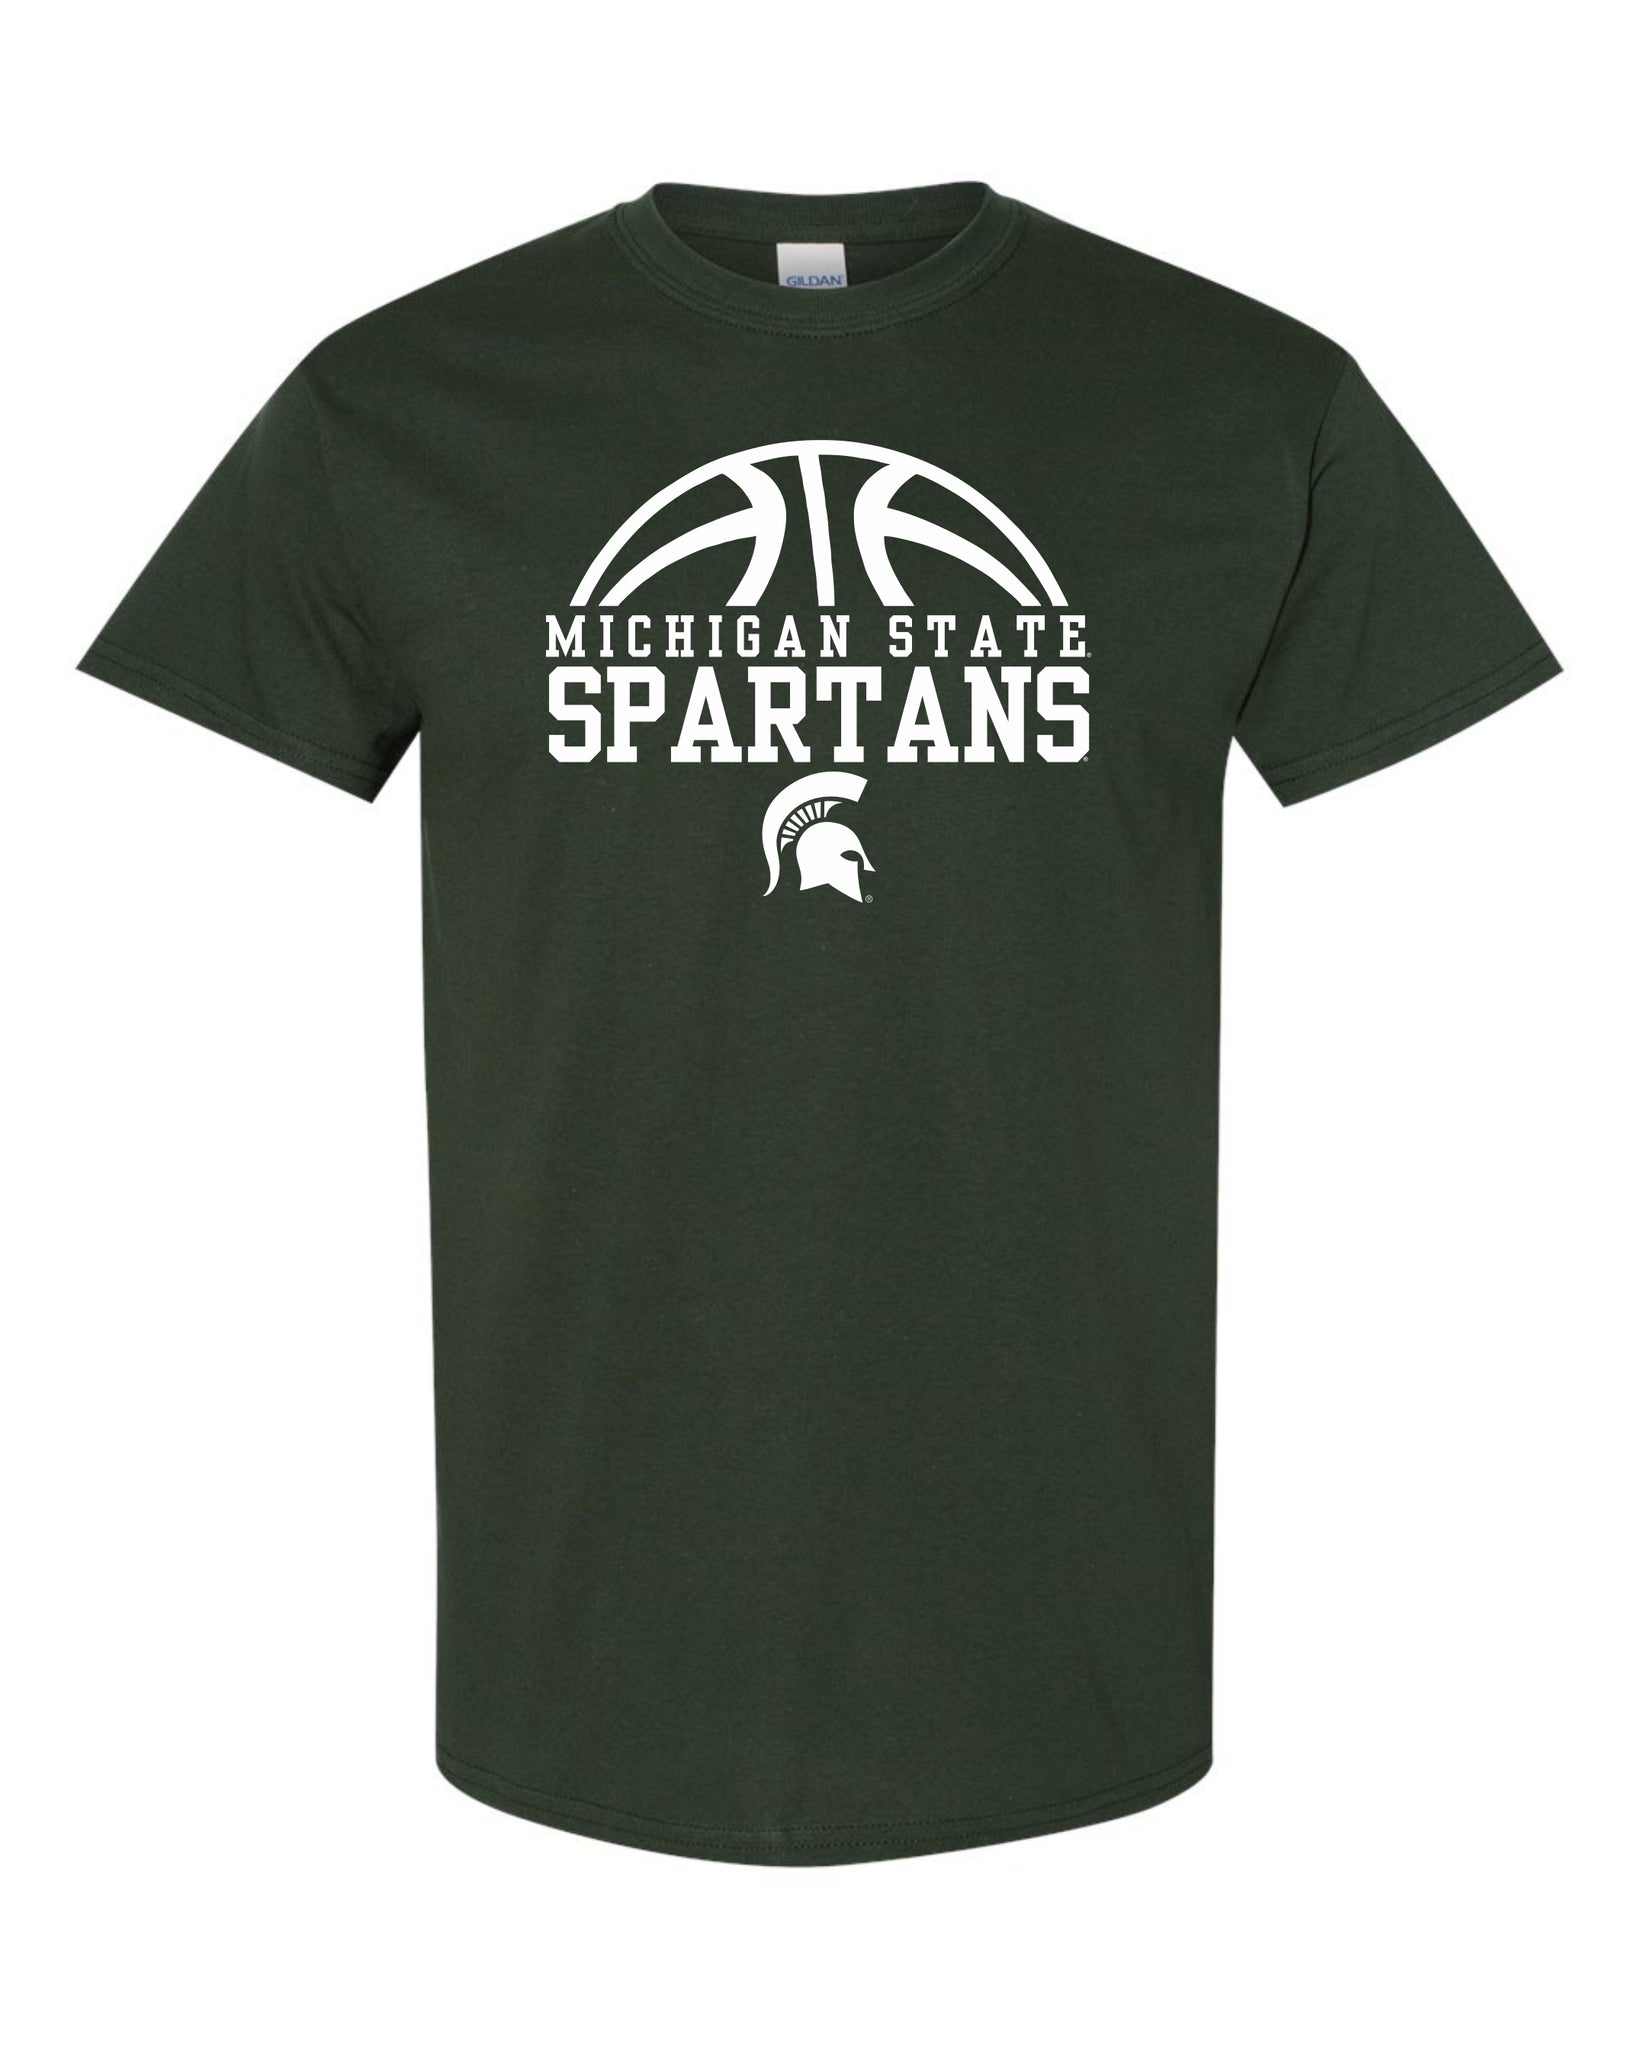 Fan t-shirt design for college basketball team